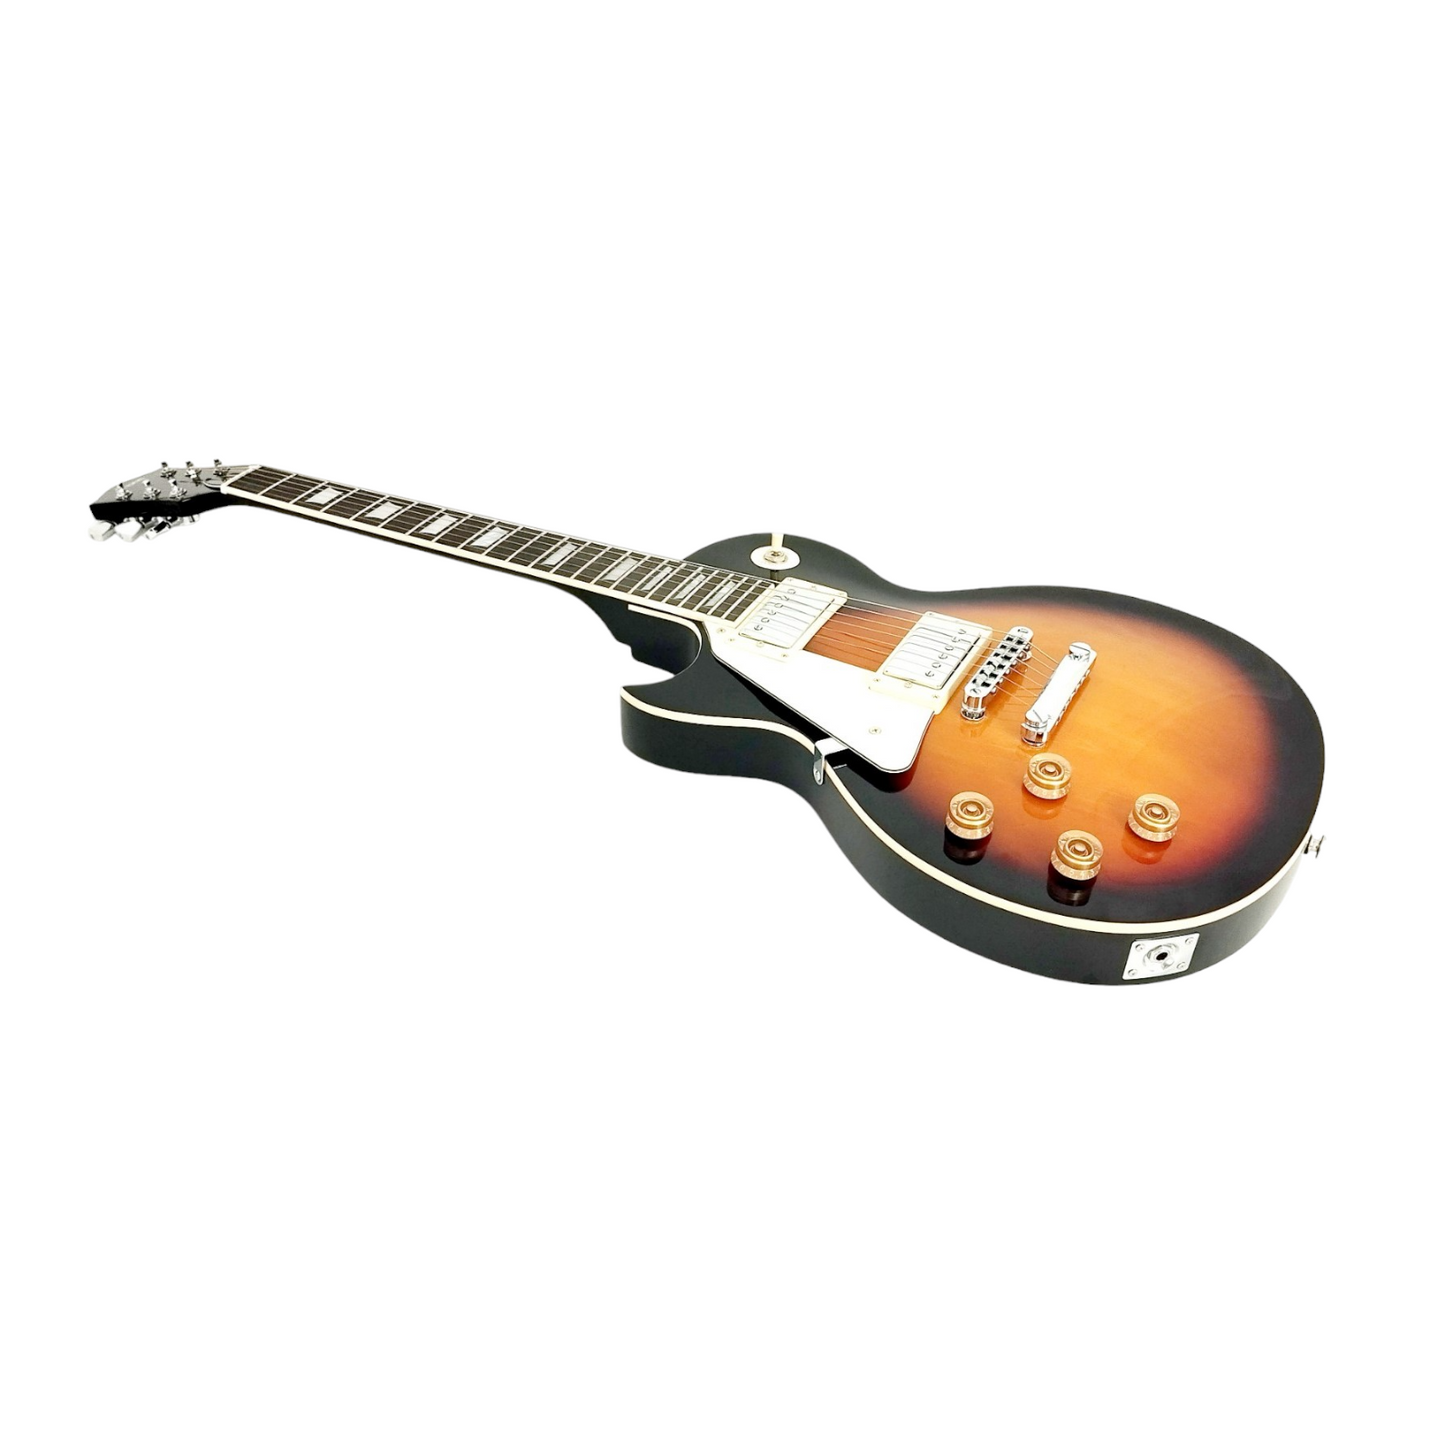 Haze Left Handed HH Maple Electric Guitar - Vintageburst SEG277BSLH